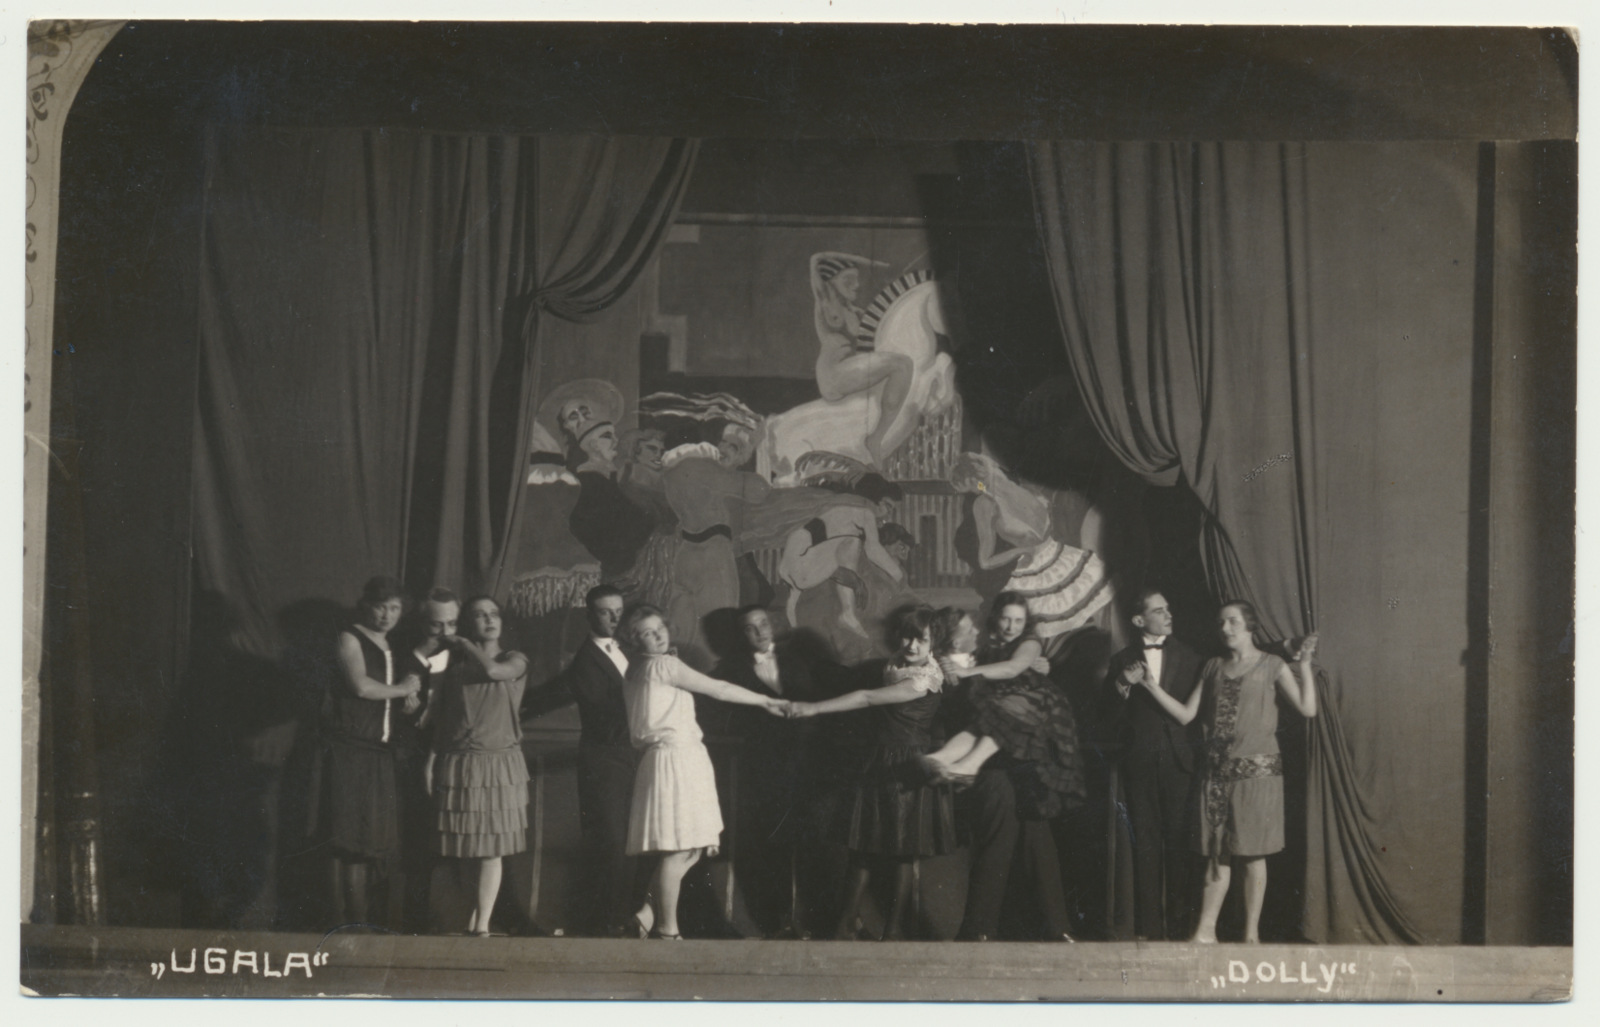 foto, Viljandi, teater Ugala, operett "Dolly", 1928